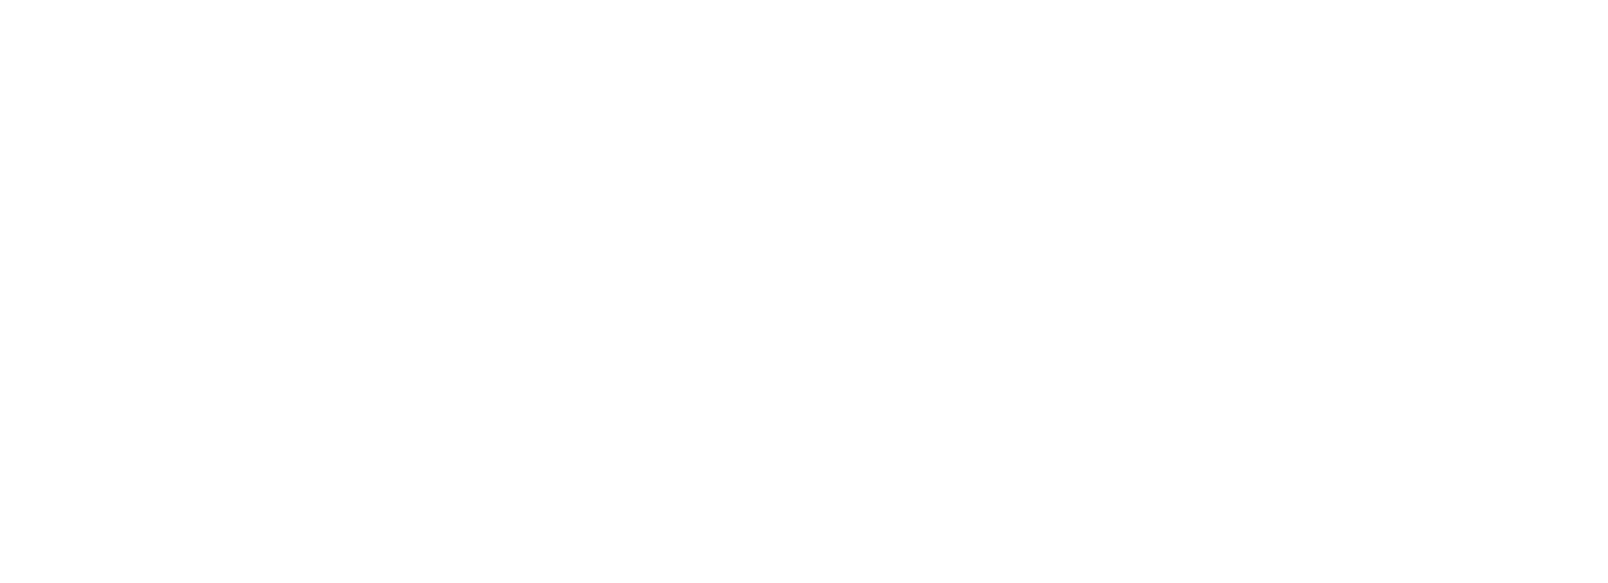 THE YELLOW MONKEY SUPER メカラ ウロコ・29 -FINAL-